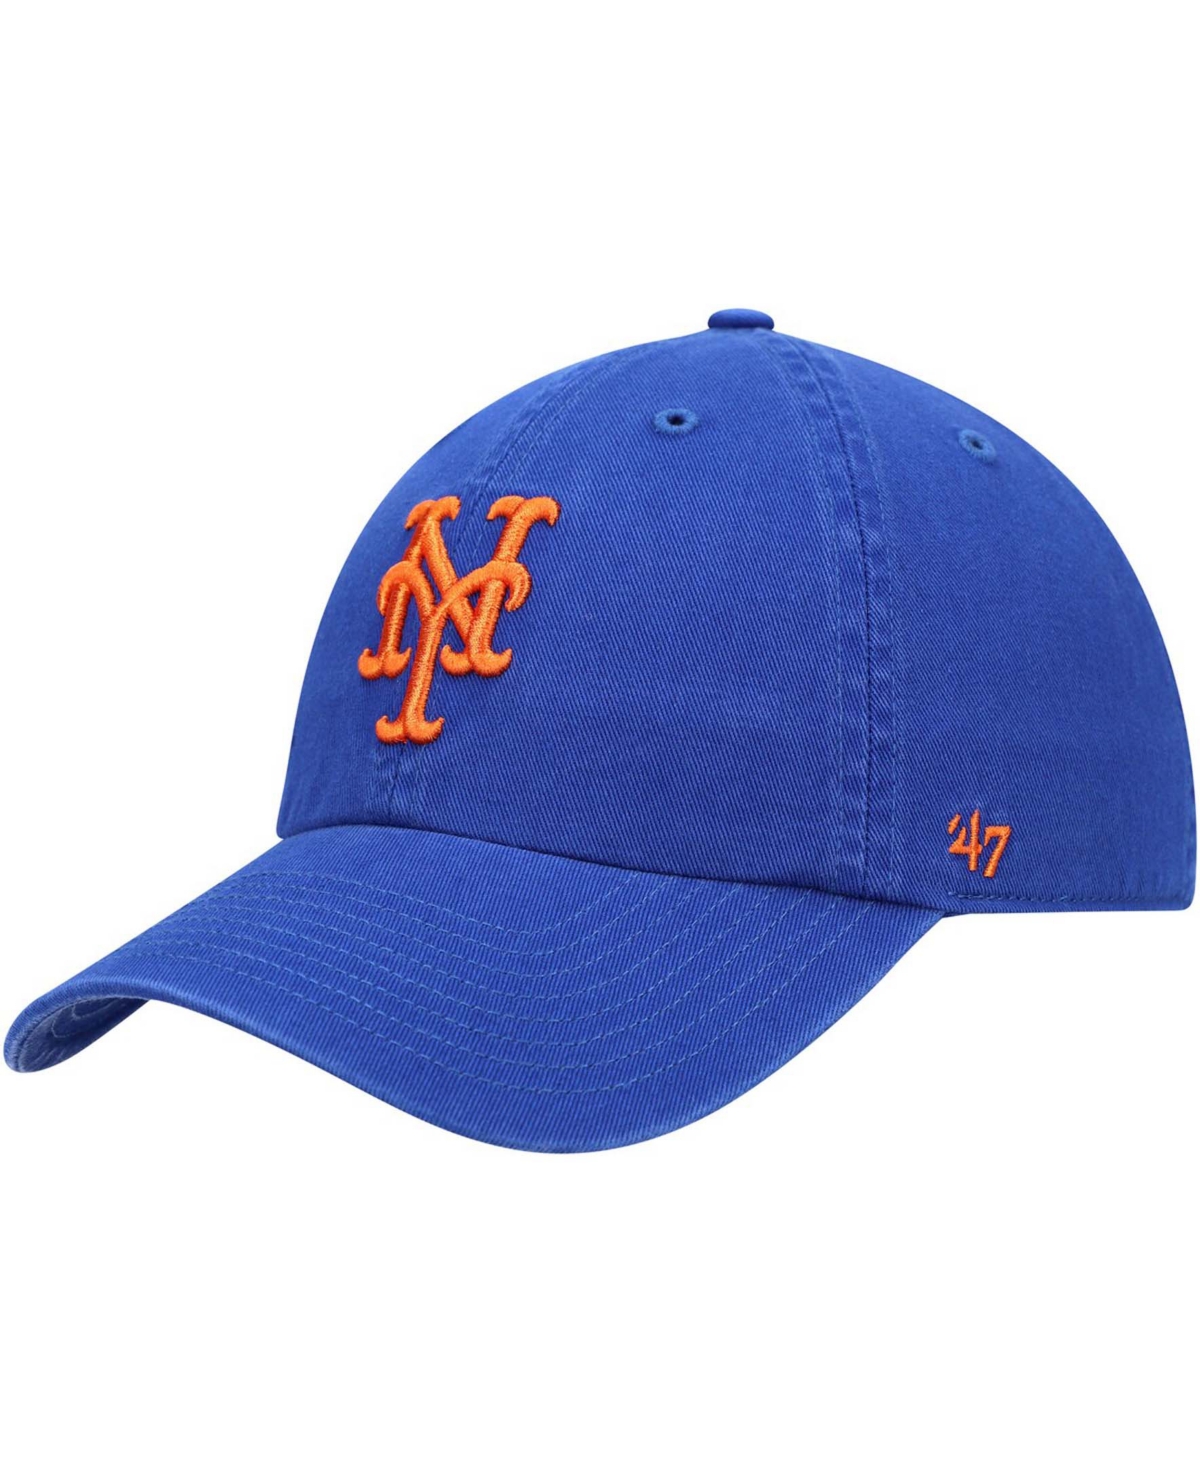 New York Mets Game Clean Up Adjustable Cap - Royal